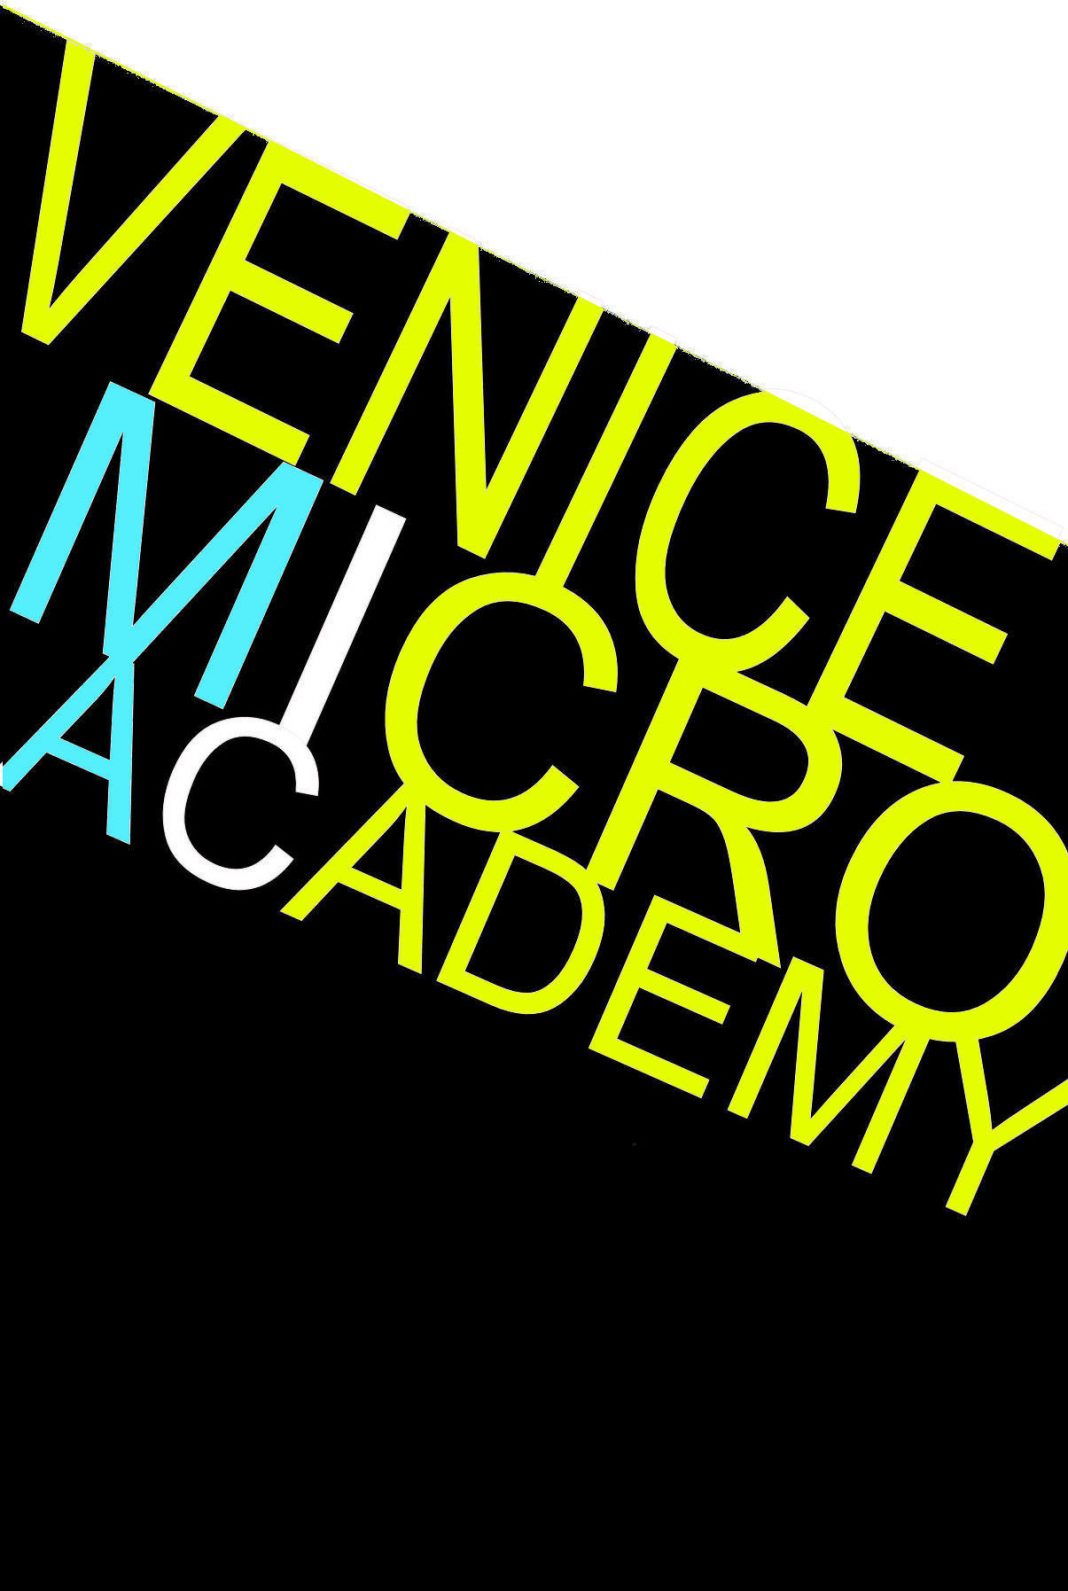 Venice Micro Academyhttps://www.exibart.com/repository/media/eventi/2015/04/venice-micro-academy-1068x1591.jpg